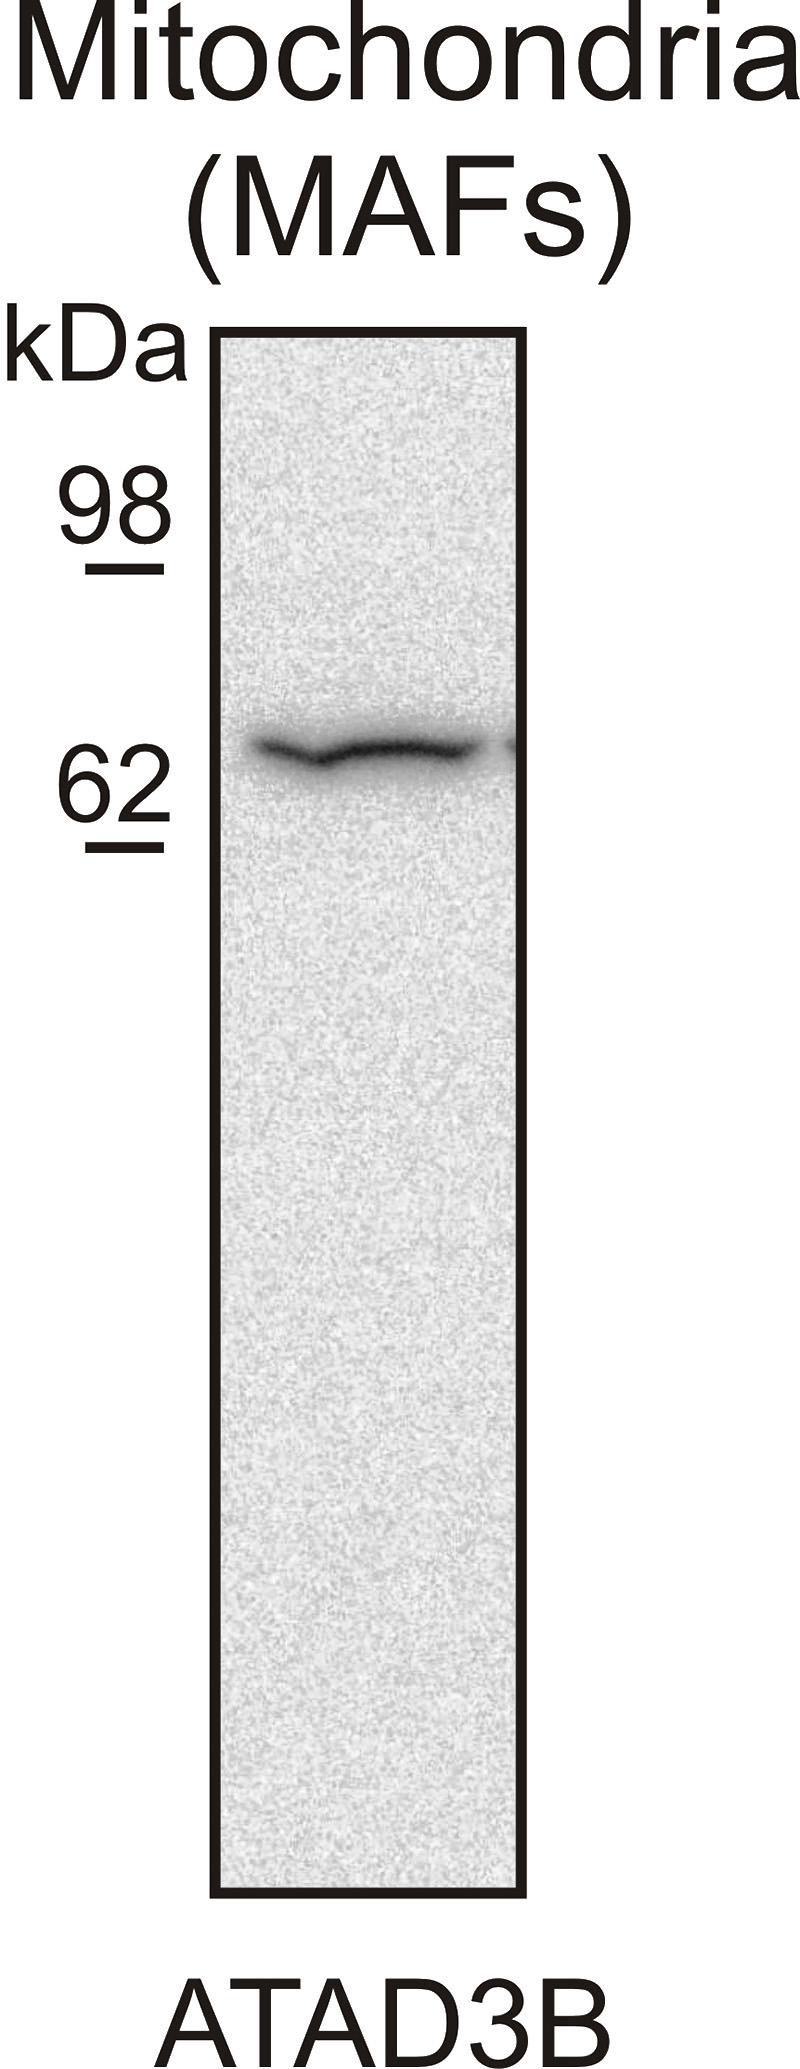 WB result of ATAD3B antibody (Catalog No:108278, 1:500) with mitochondrial lysates from MAFs cells (by Maria Eugenia Soriano of UNIVERSITY OF PADUA, ITALY)